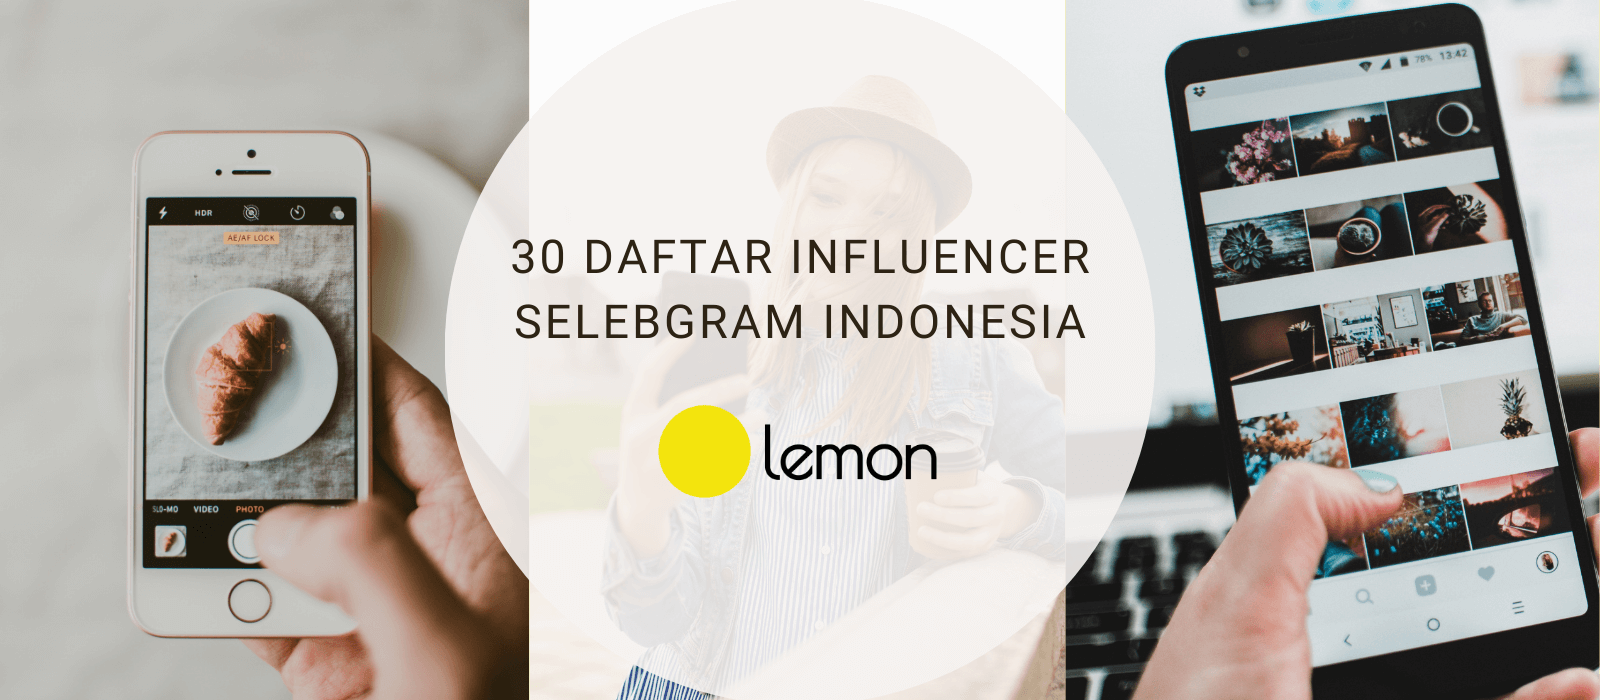 Daftar influencer selebgram Indonesia